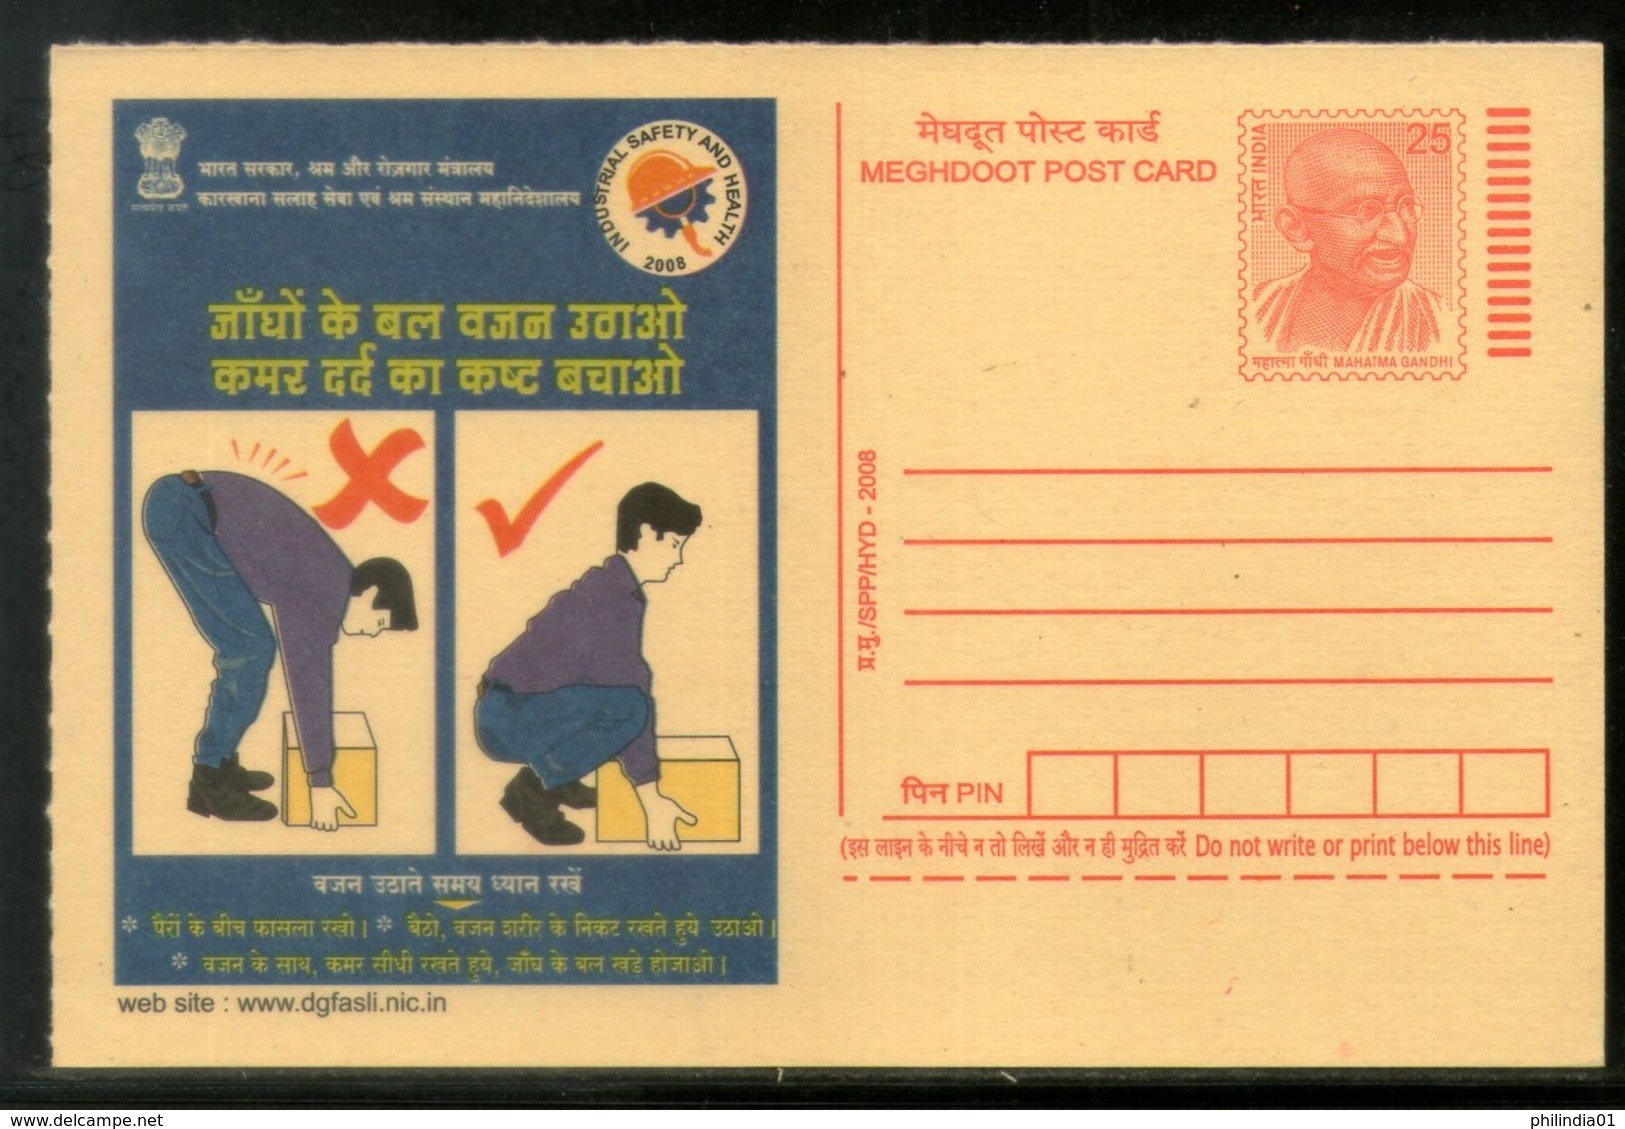 India 2008 Prevent Backaches Industrial Safety & Health Hindi Advert.Gandhi Post Card # 501 - Accidentes Y Seguridad Vial